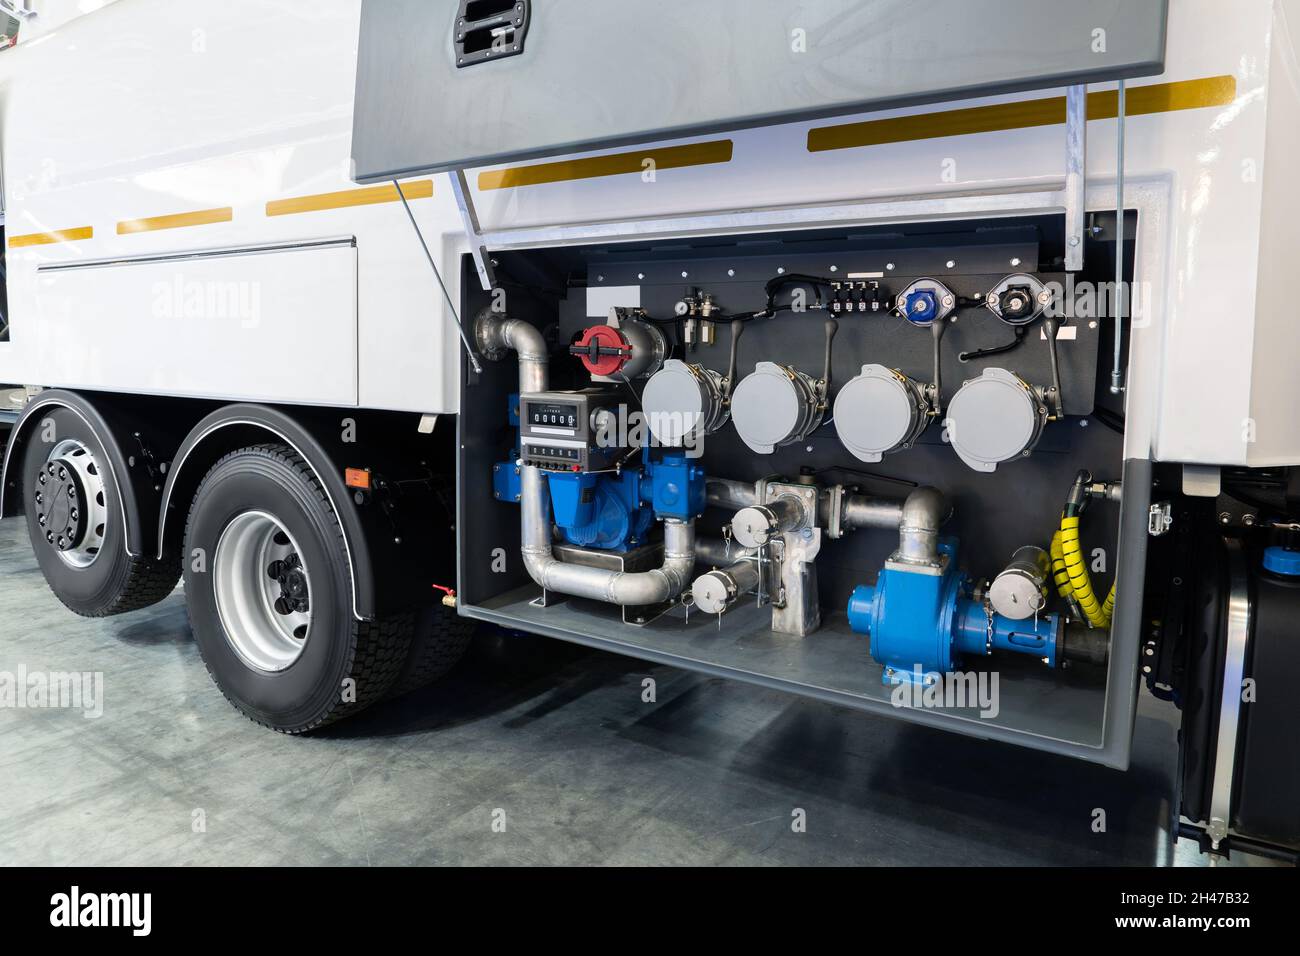 Equipo para bombear combustible en un camión cisterna de combustible Foto de stock